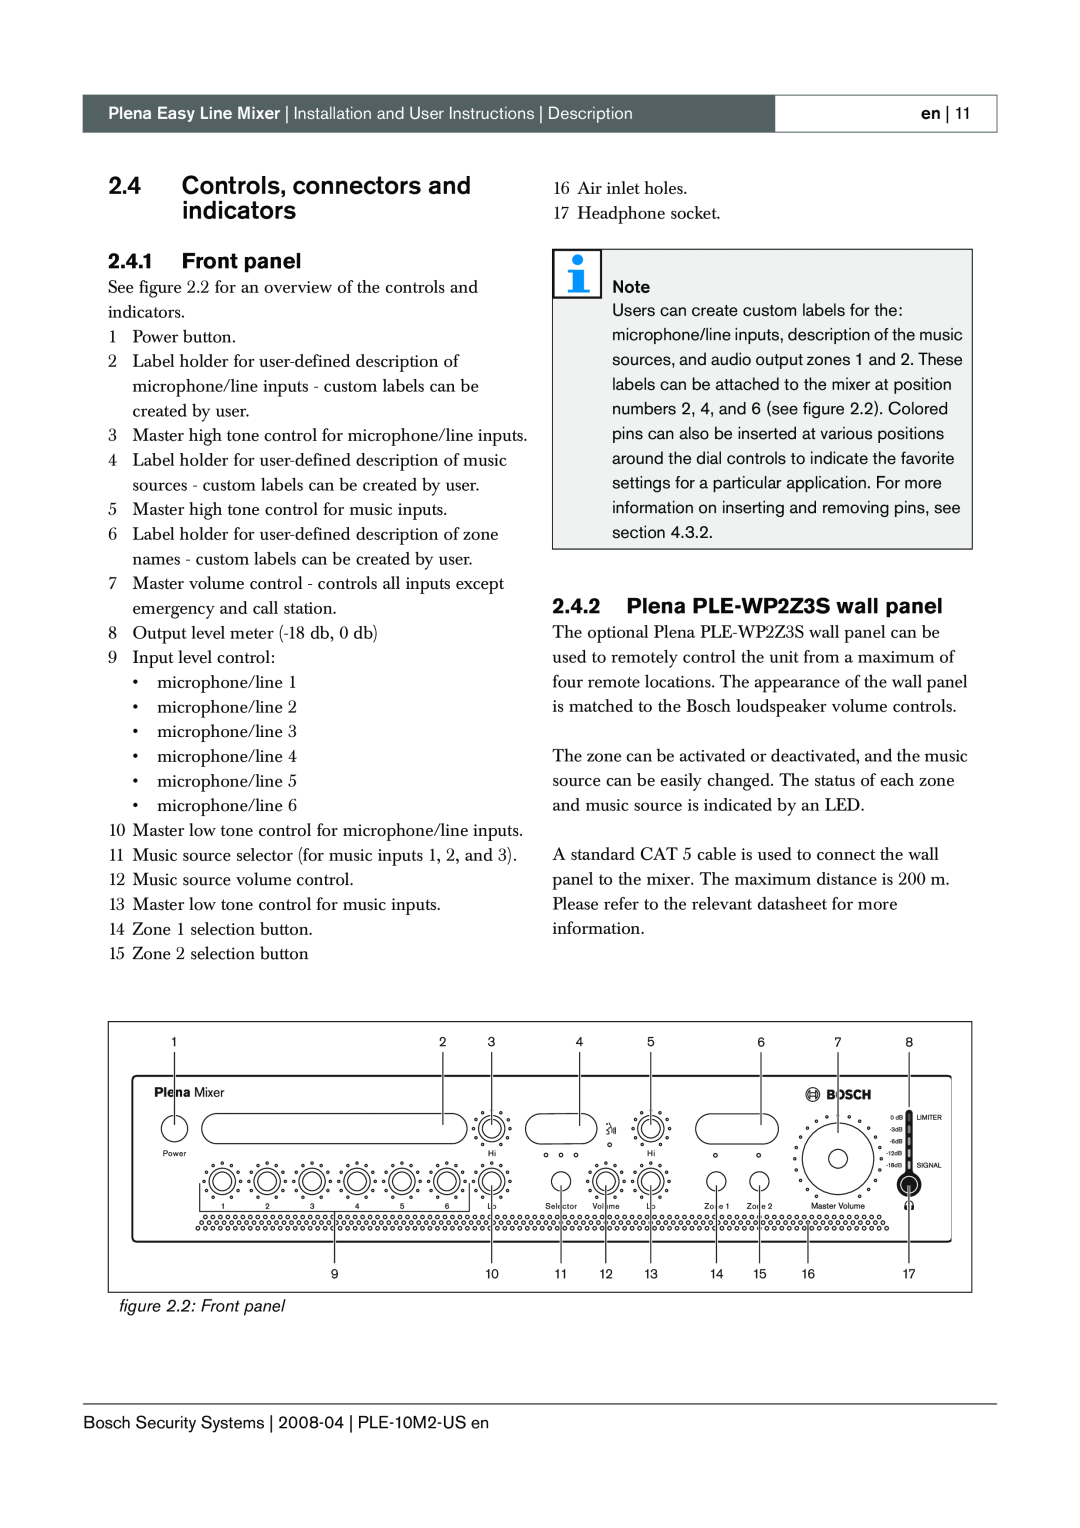 Bosch Appliances PLE-10M2-US 2.4Controls, connectors and indicators, 2.4.1Front panel, 2.4.2Plena PLE-WP2Z3Swall panel 